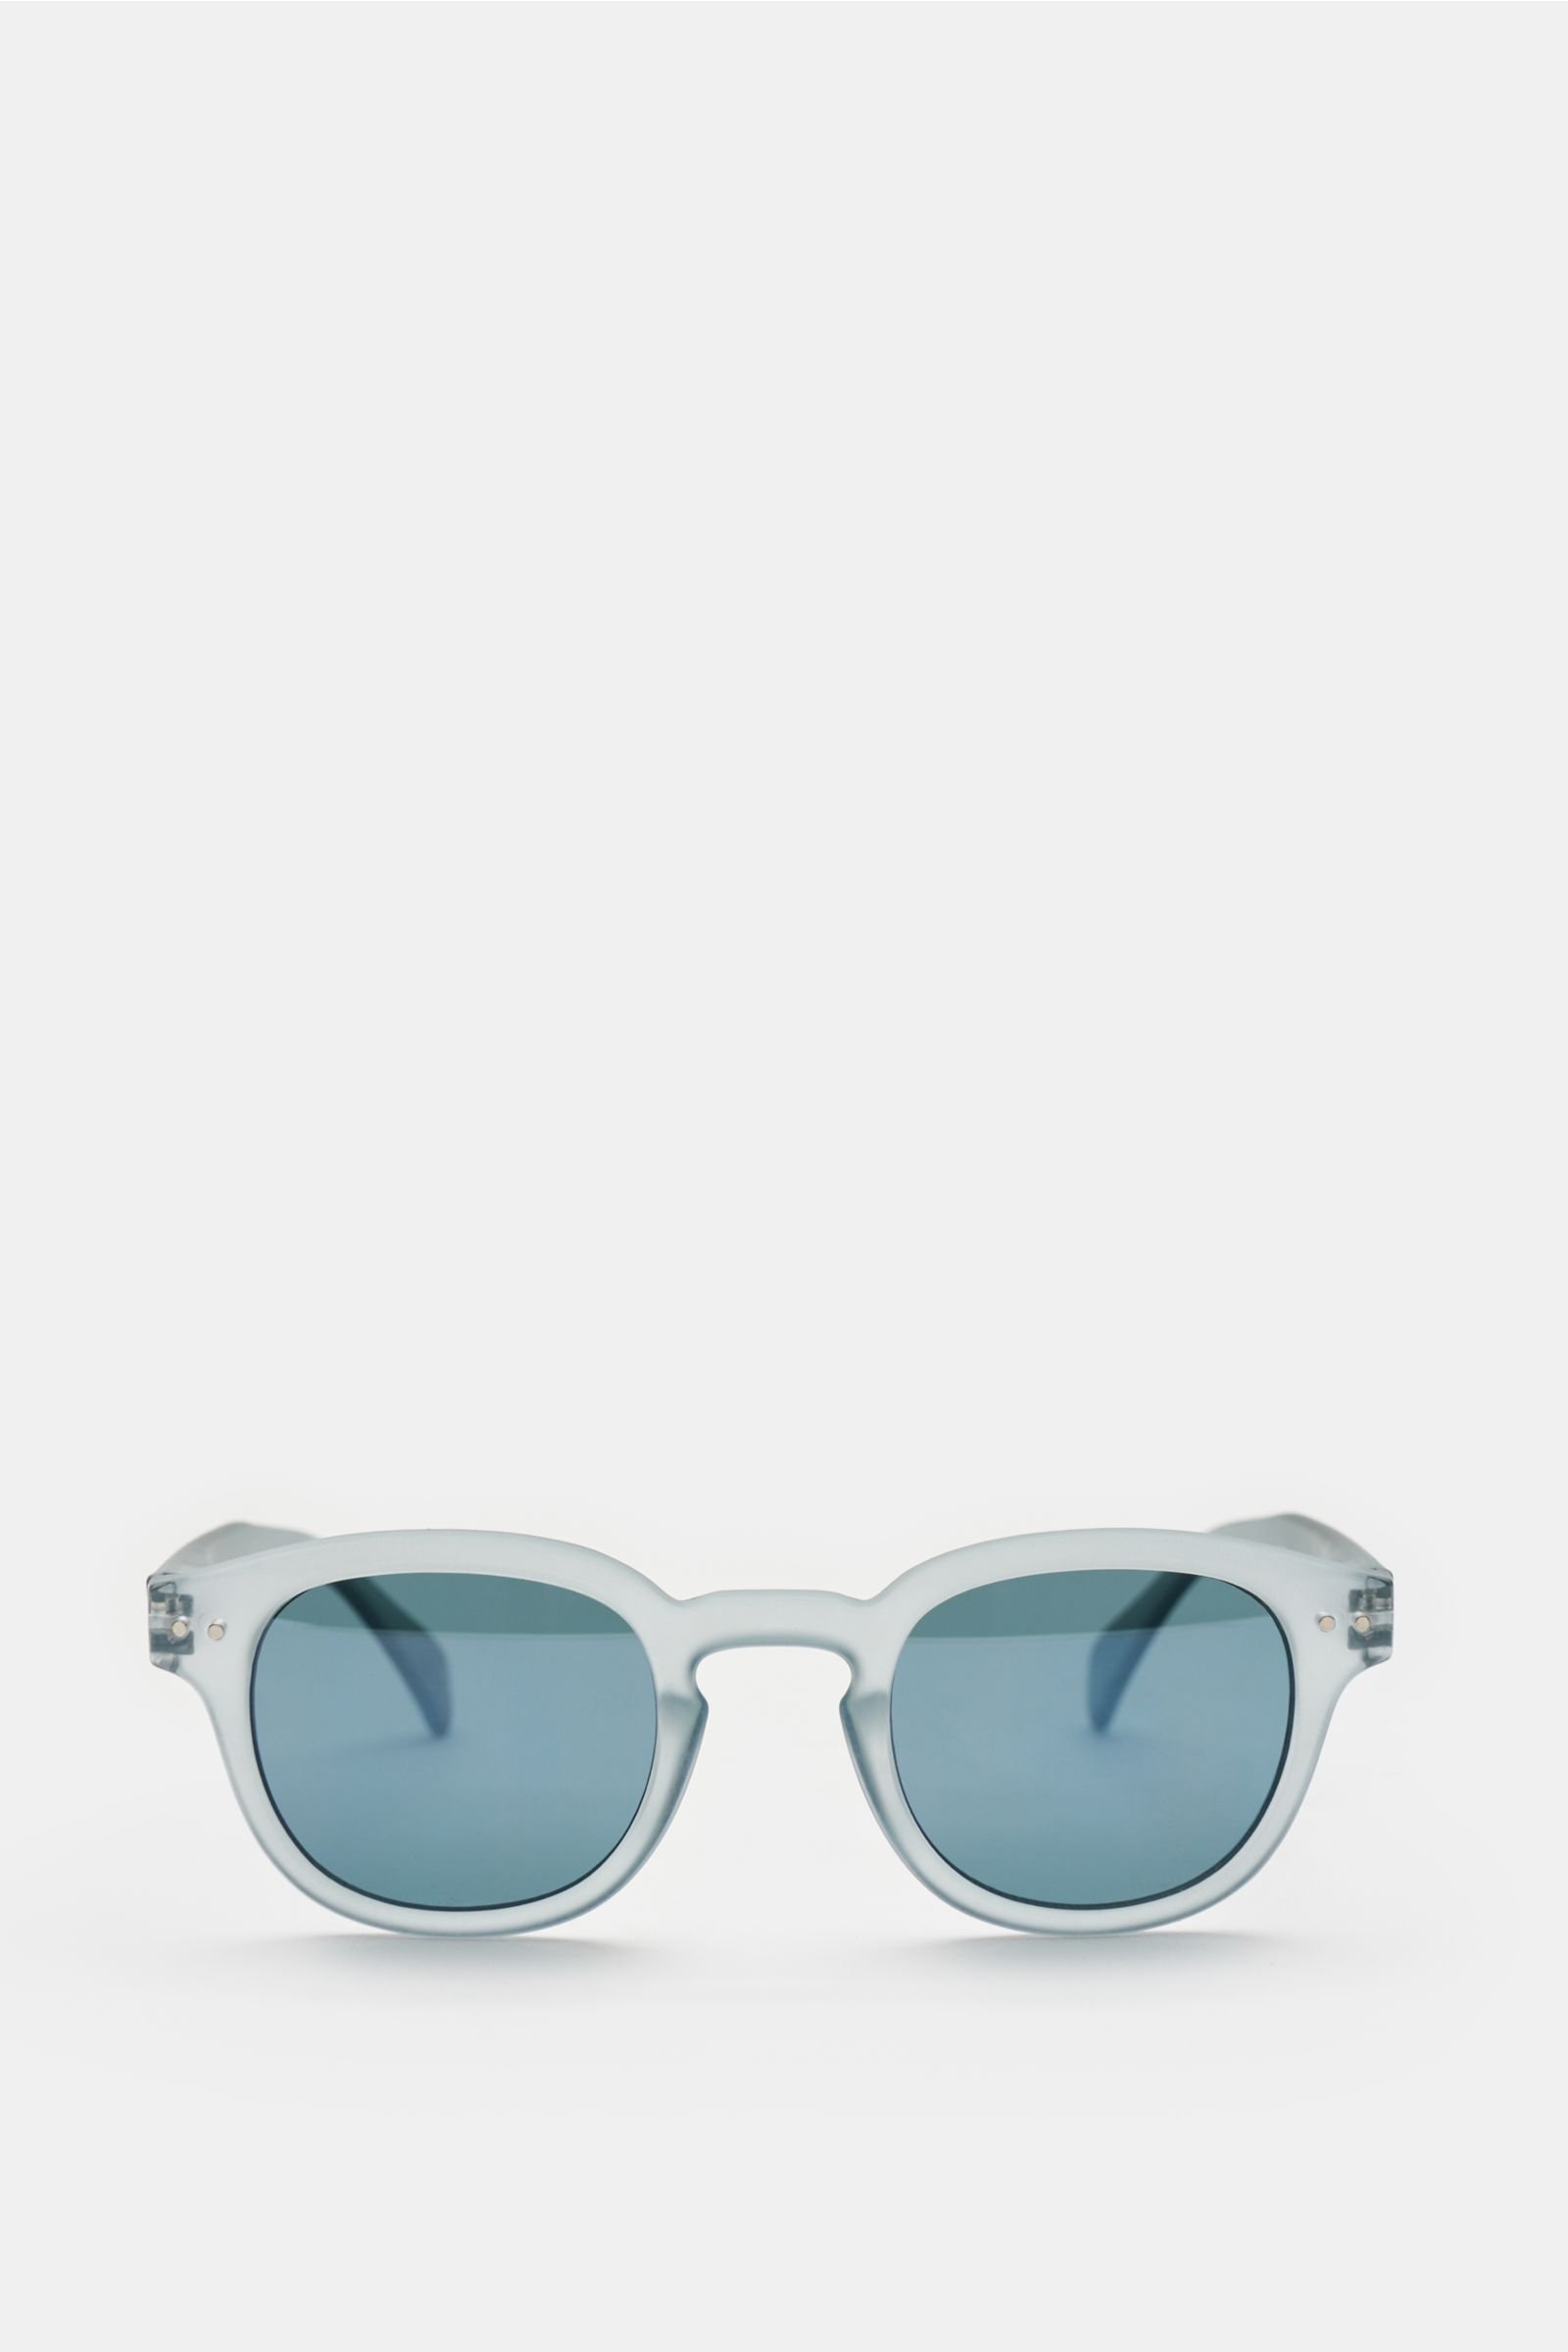 Sunglasses '#C Sun' grey-blue